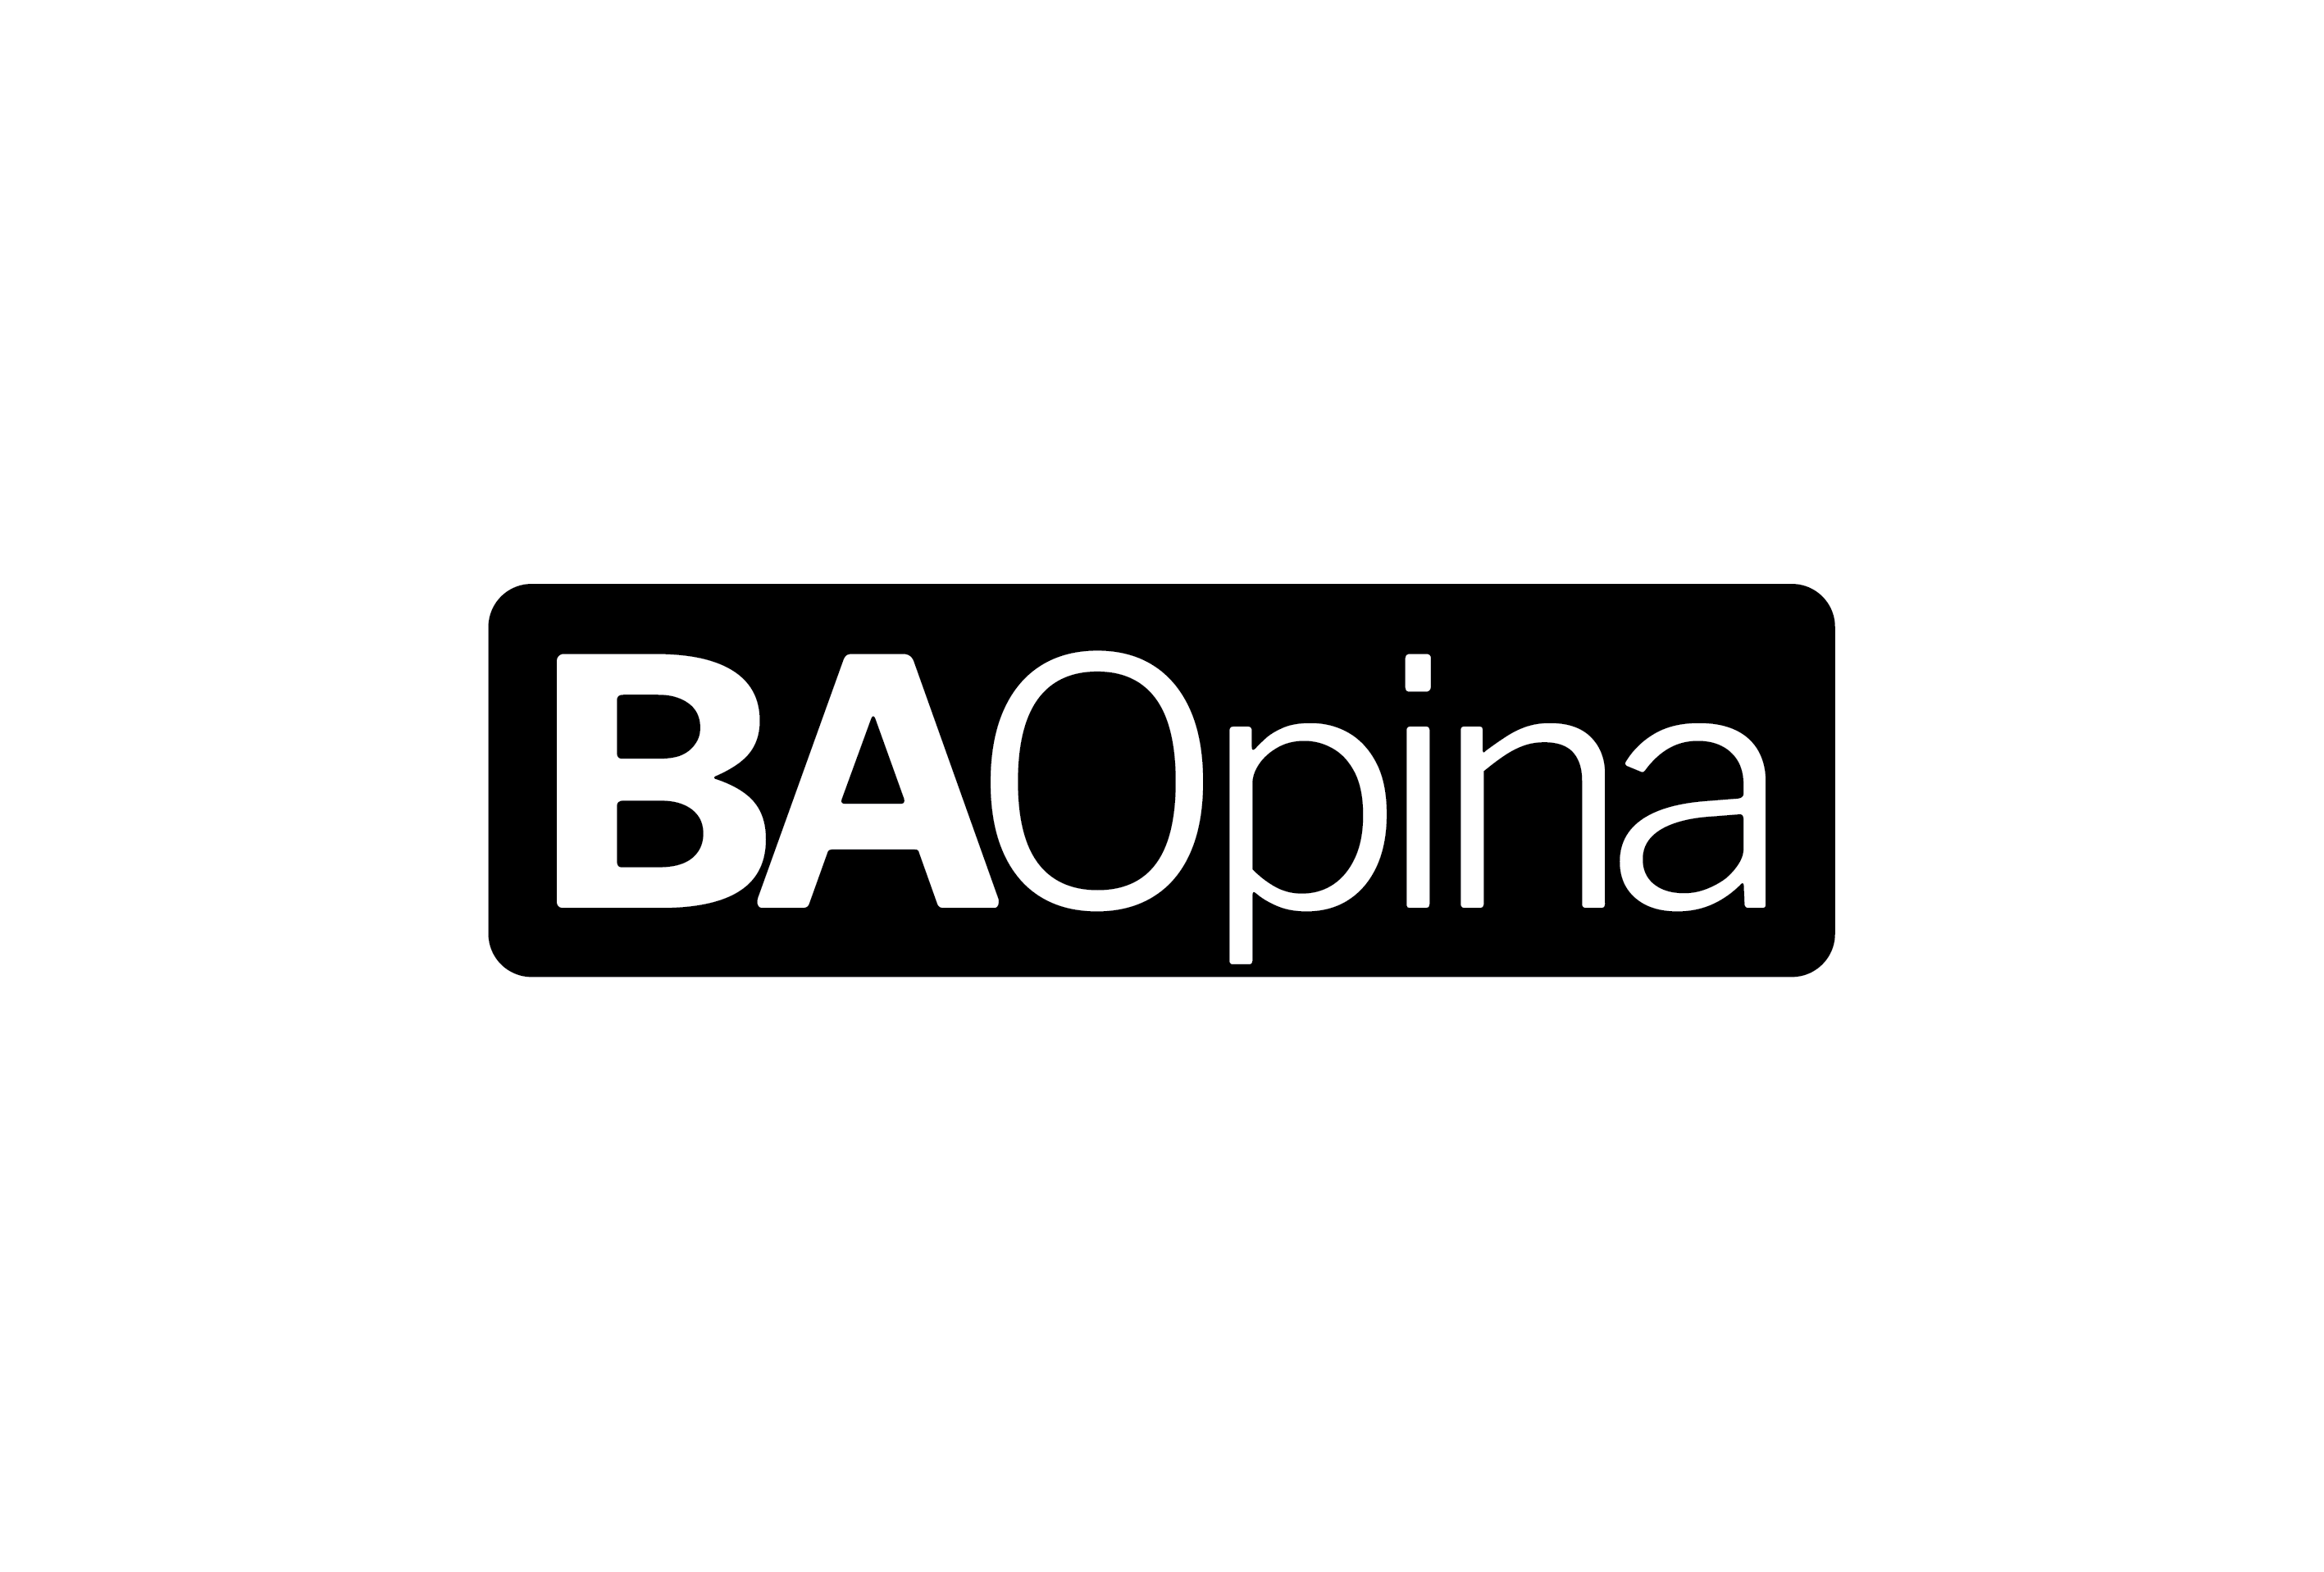 (c) Baopina.com